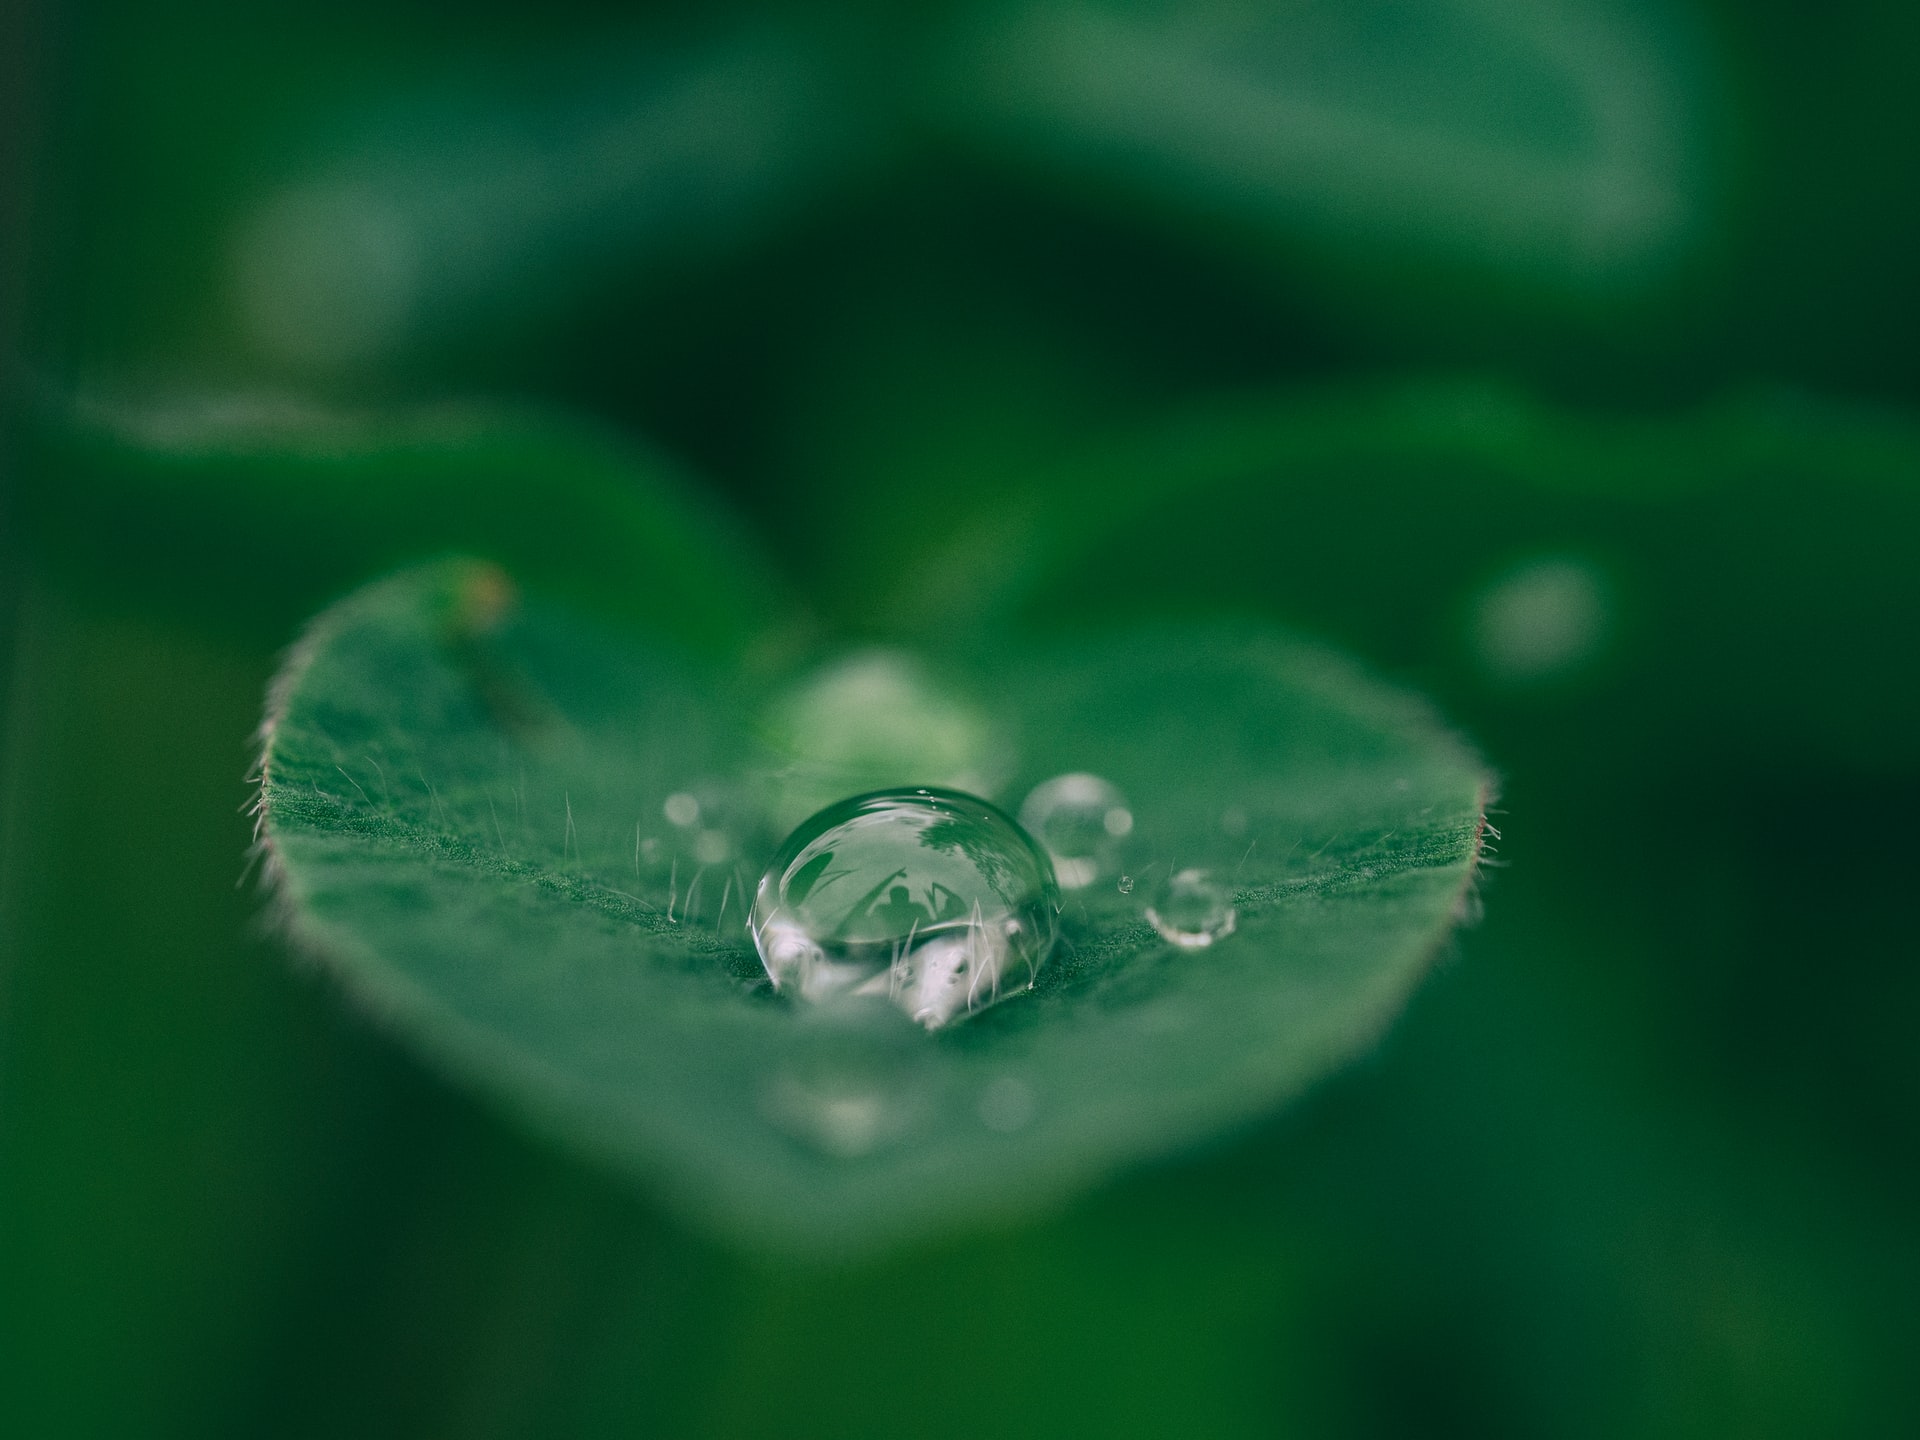 water-leaf